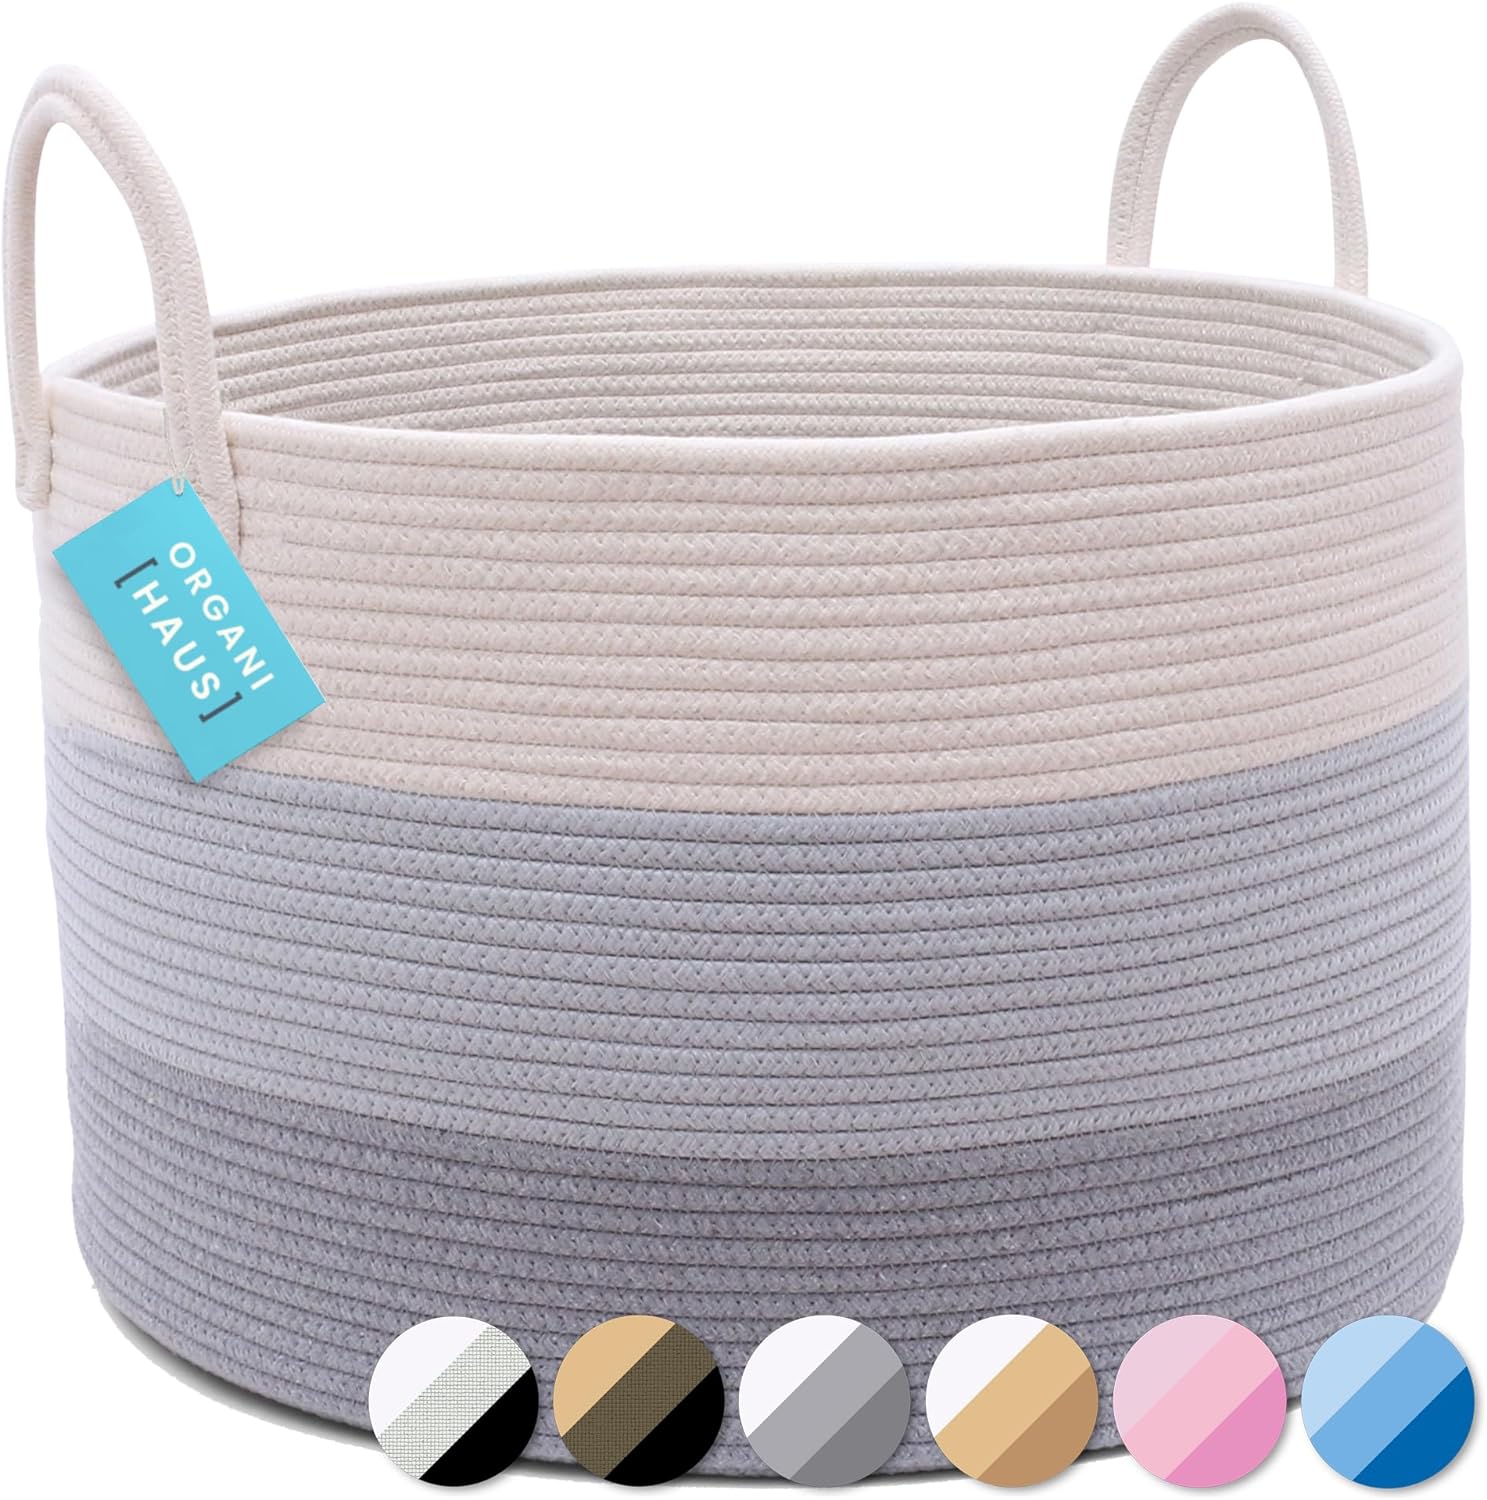  OrganiHaus Gray Extra Large Storage Basket for Blankets 20x13 | Decorative Cute Laundry Hamper Basket for Clothes | Cotton Rope Basket for Blankets | Farmhouse Nursery Laundry Basket & Towel Hamper 